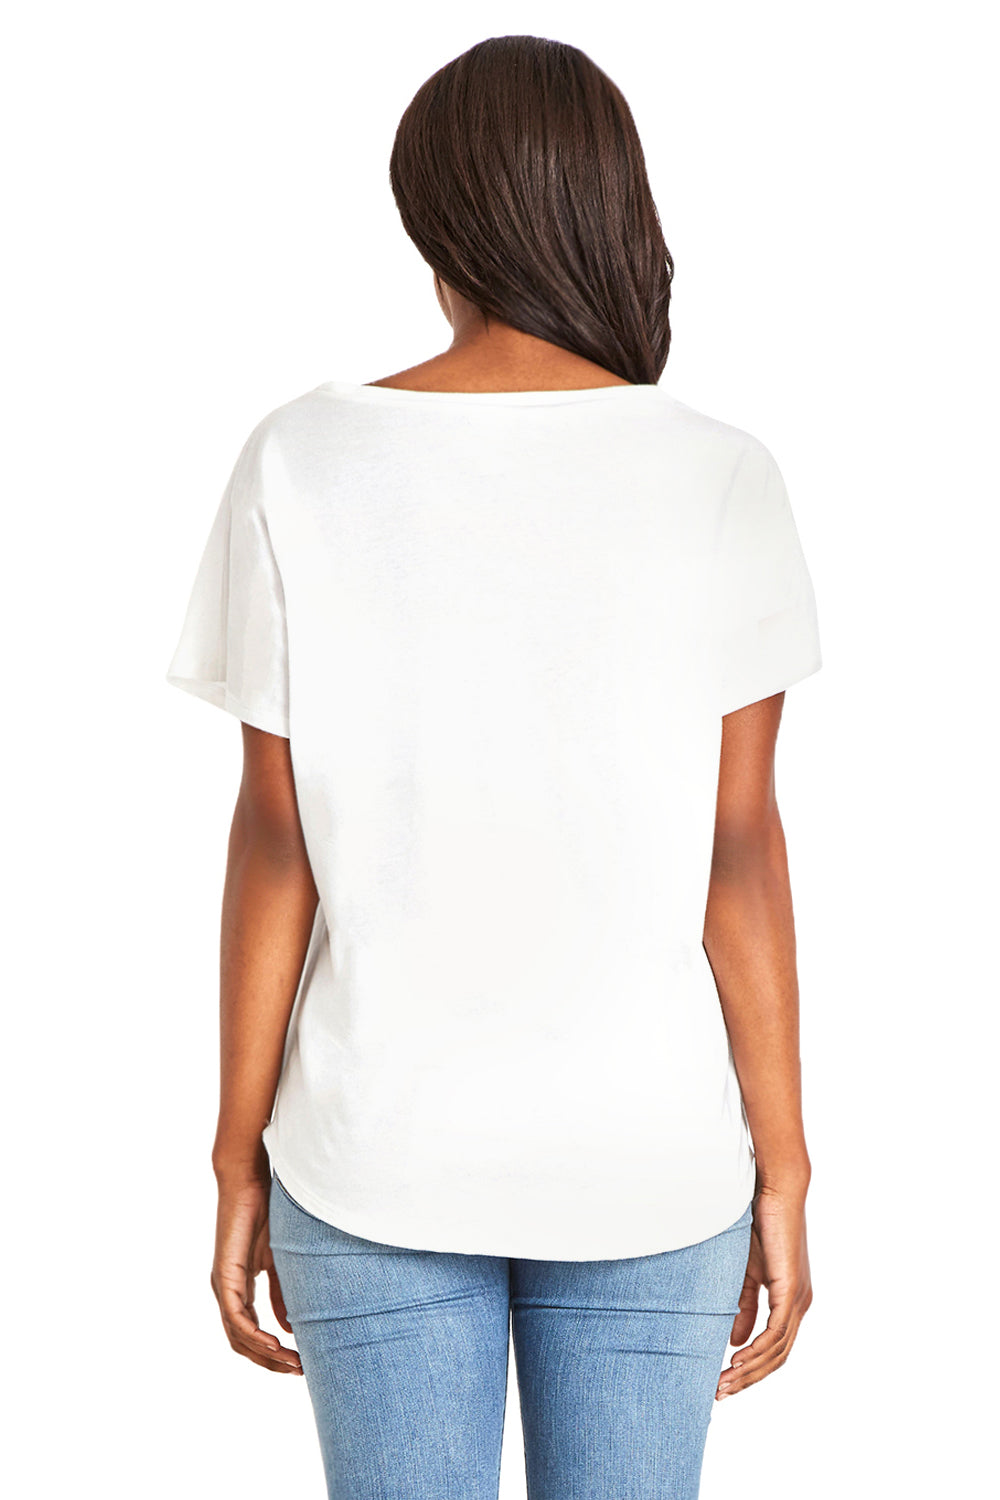 Next Level 1560 Womens Ideal Dolman Short Sleeve Crewneck T-Shirt White Back